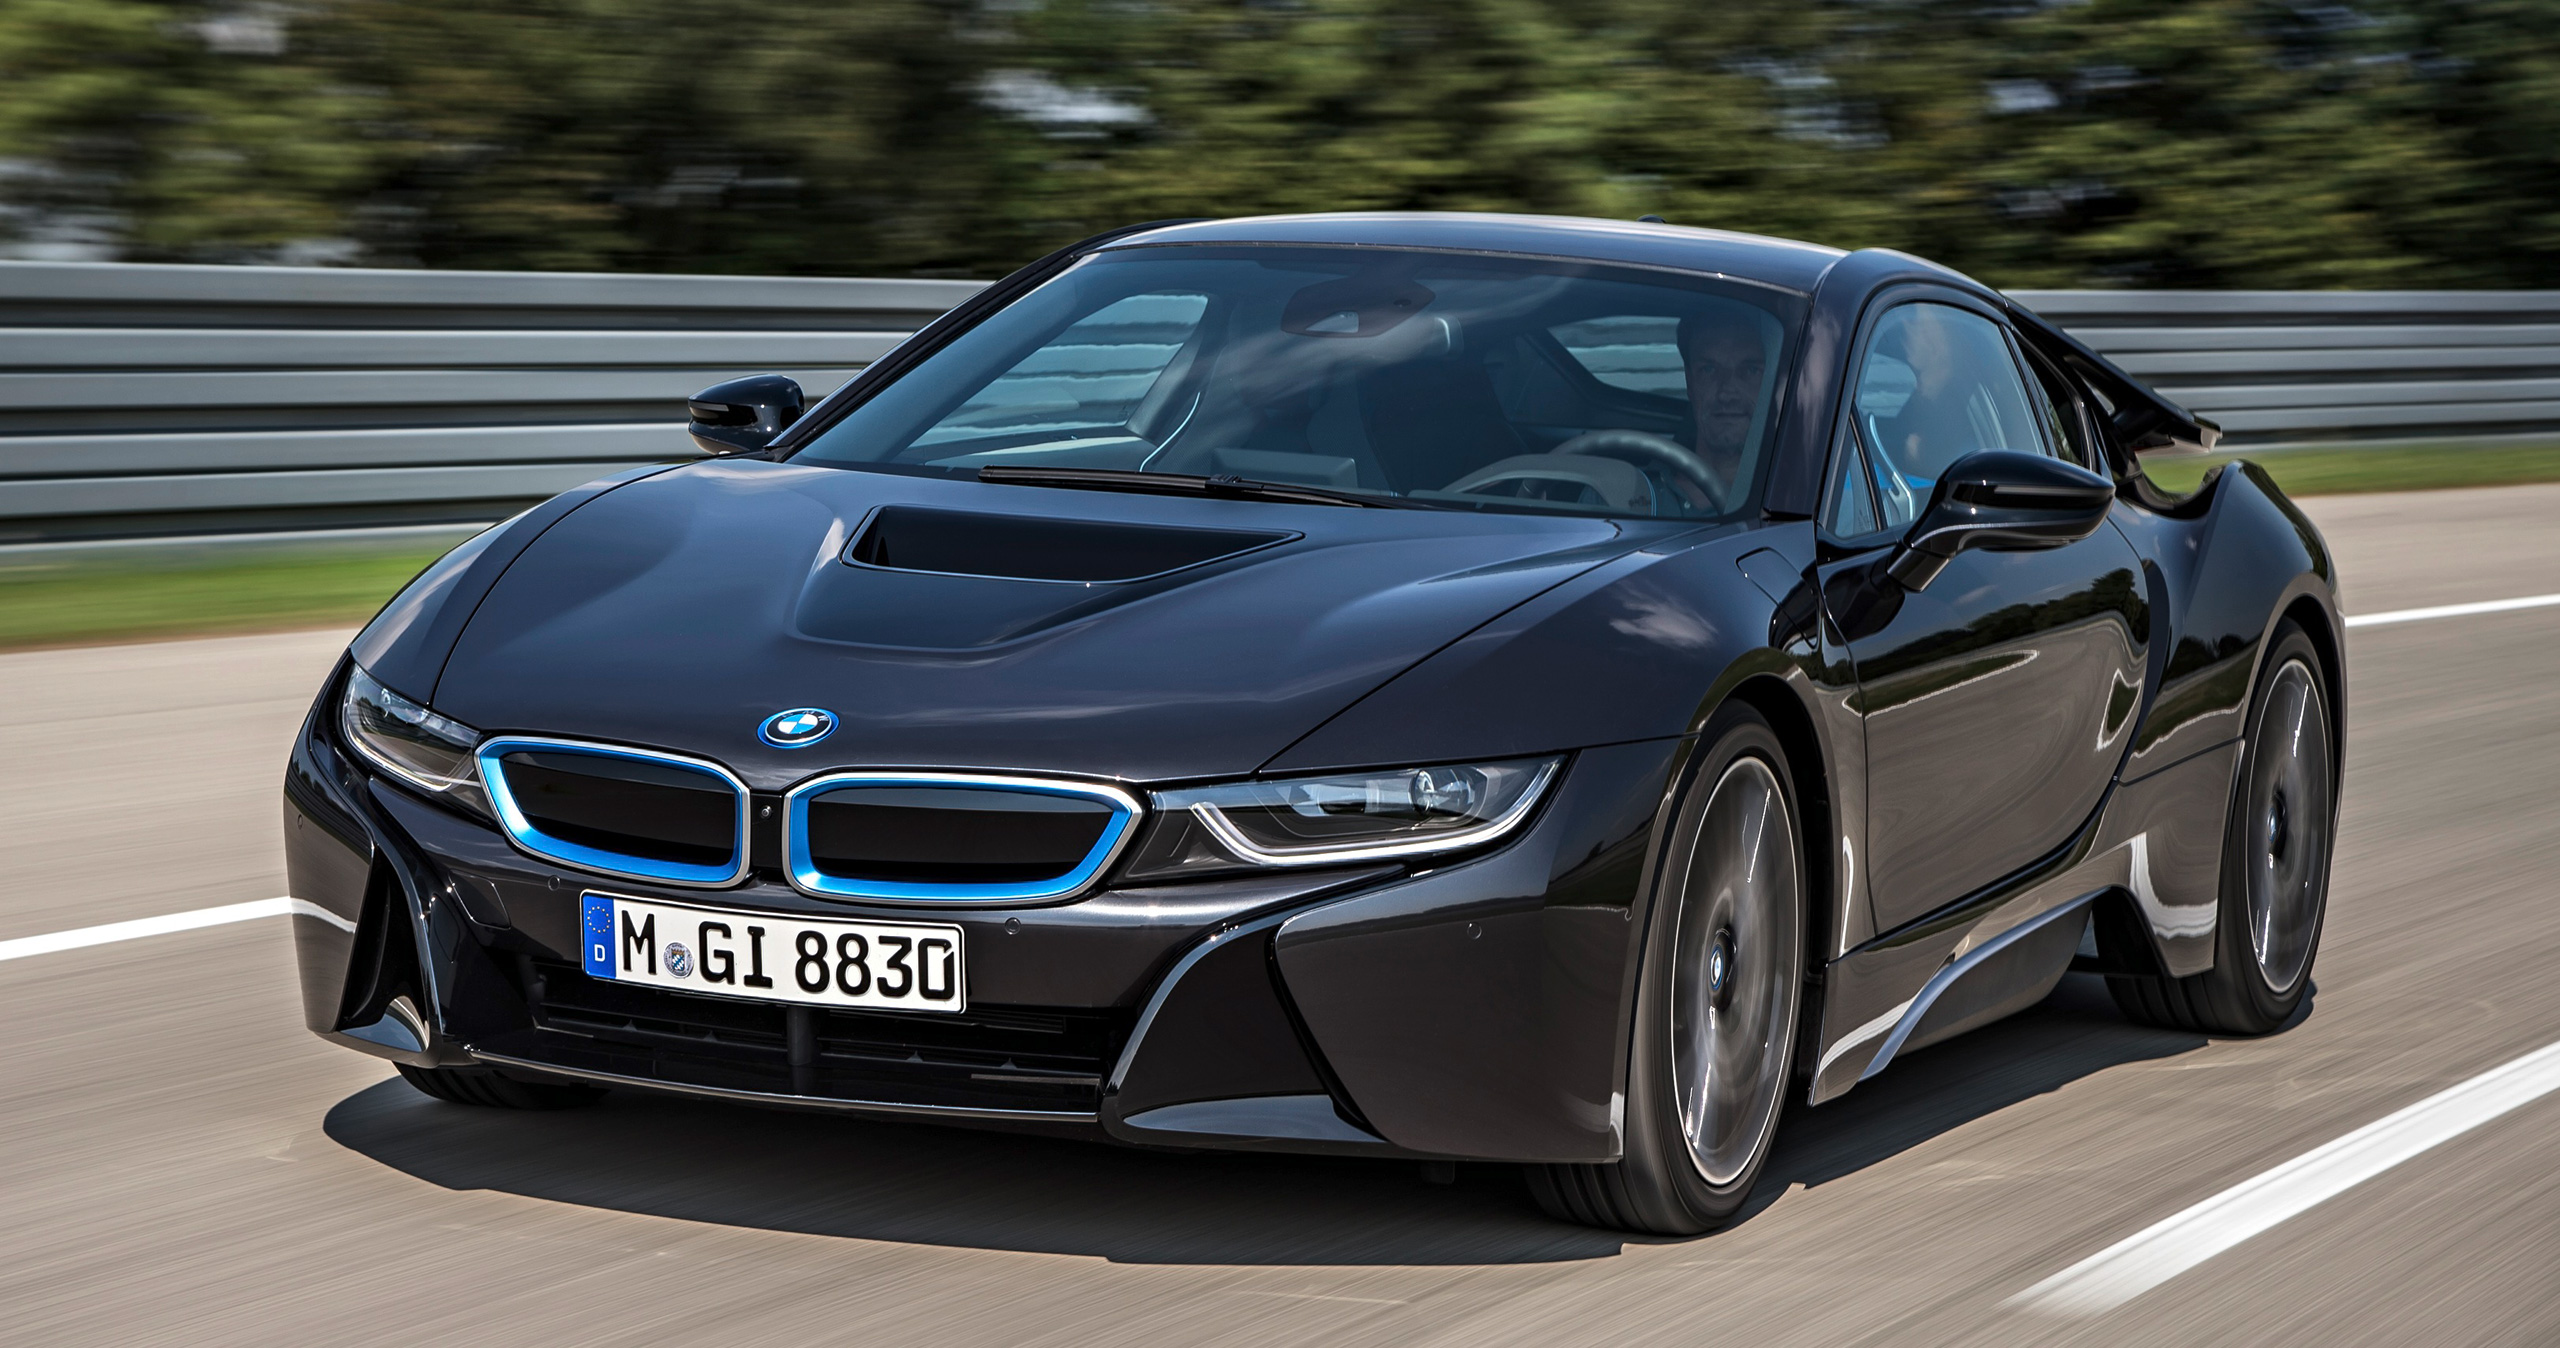 BMW i8 plug-in hybrid sports car – full official details Paul Tan